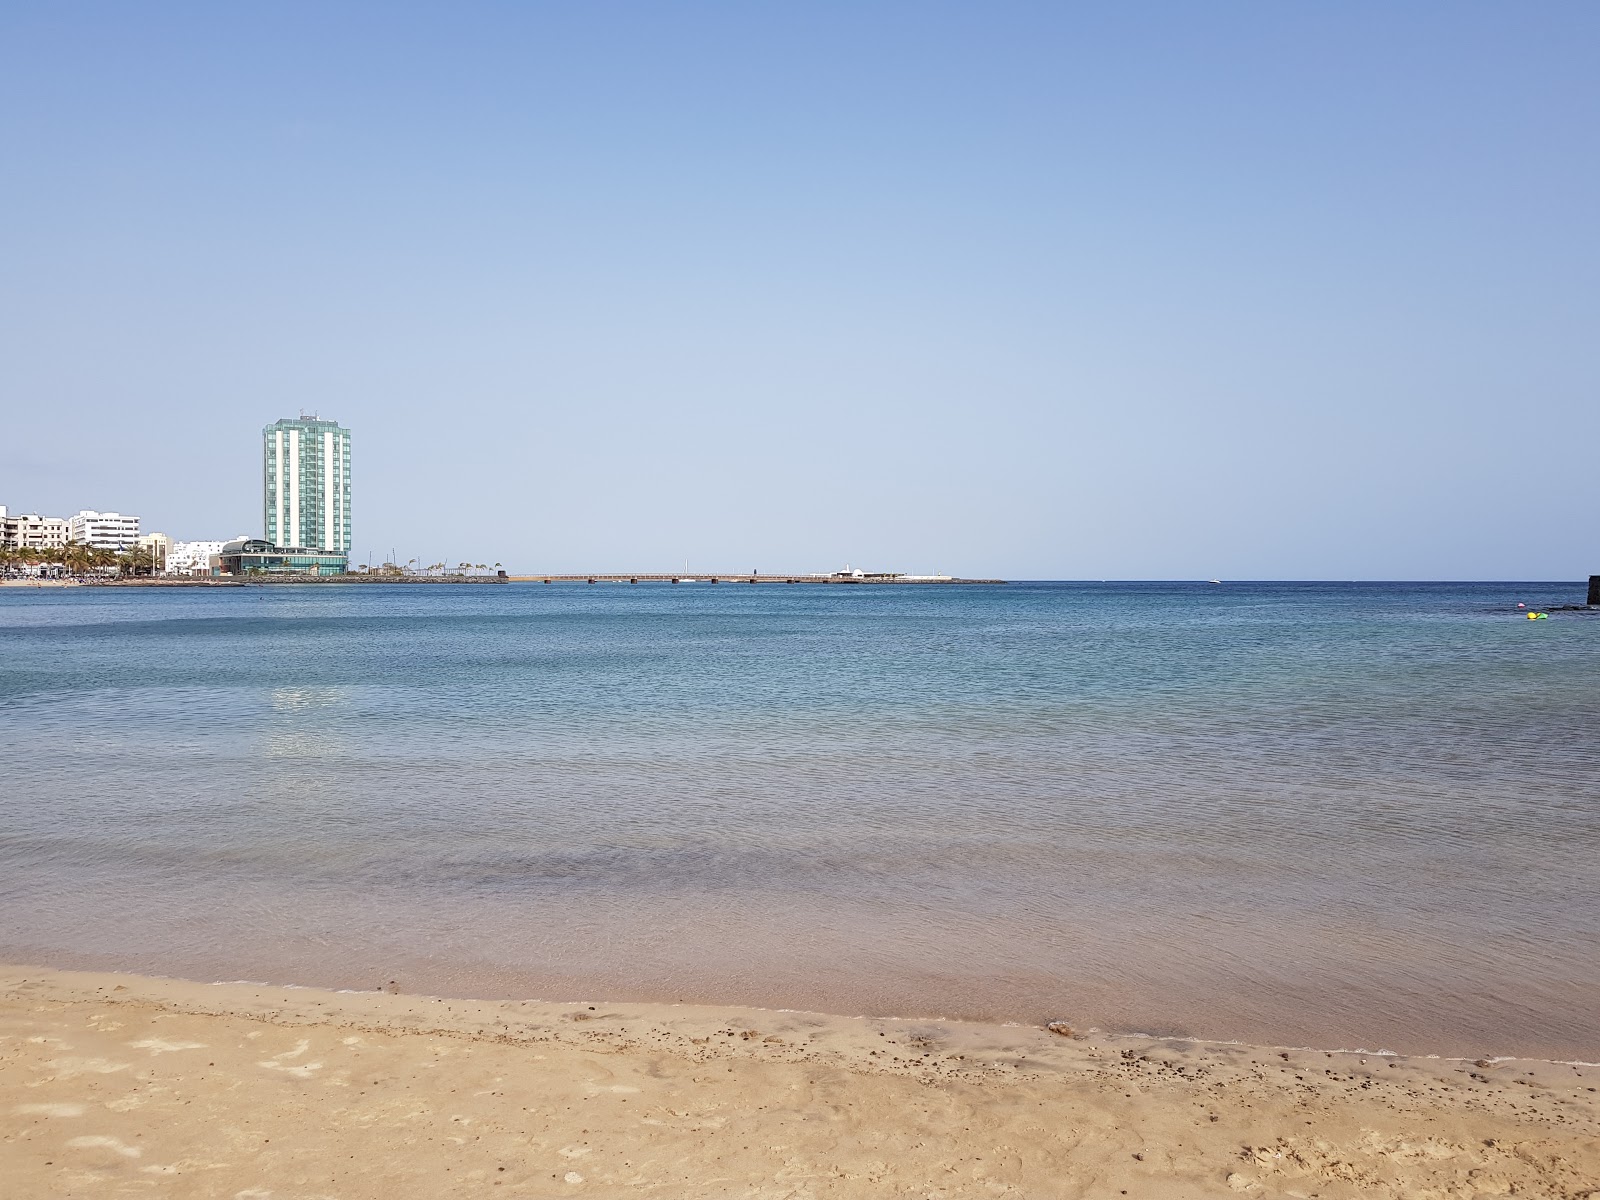 Foto de Praia Reducto - lugar popular entre os apreciadores de relaxamento